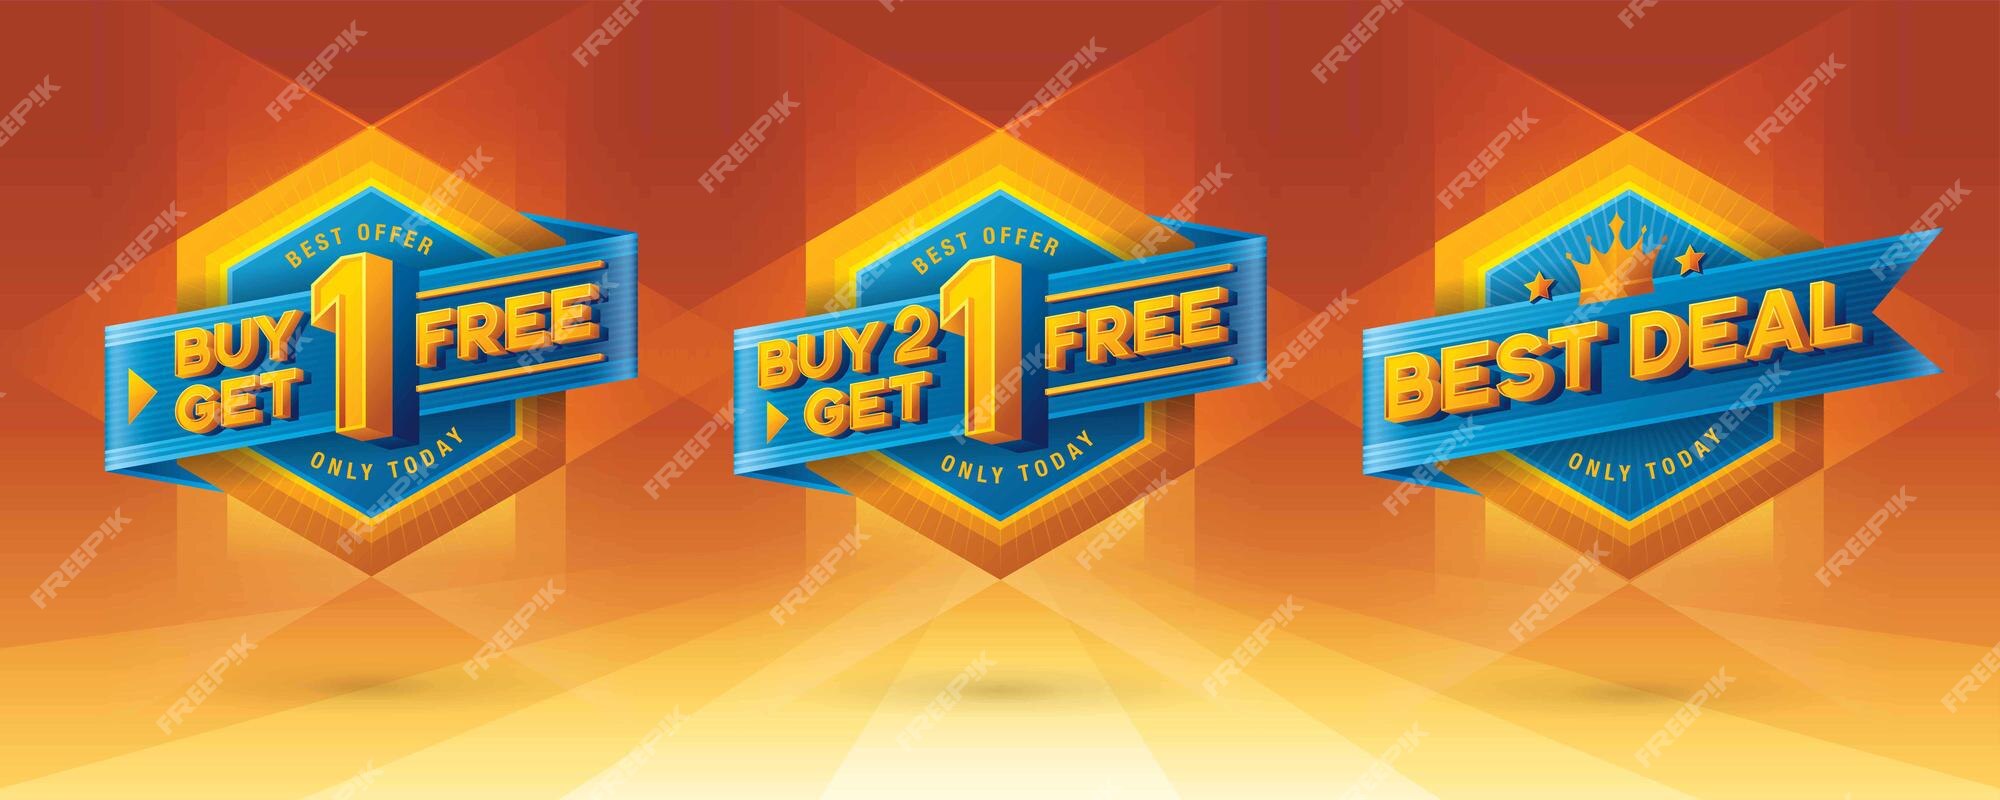 Freshgogo Coupons & Promo Codes 2021: Buy 1 Get 1 Free - wide 7